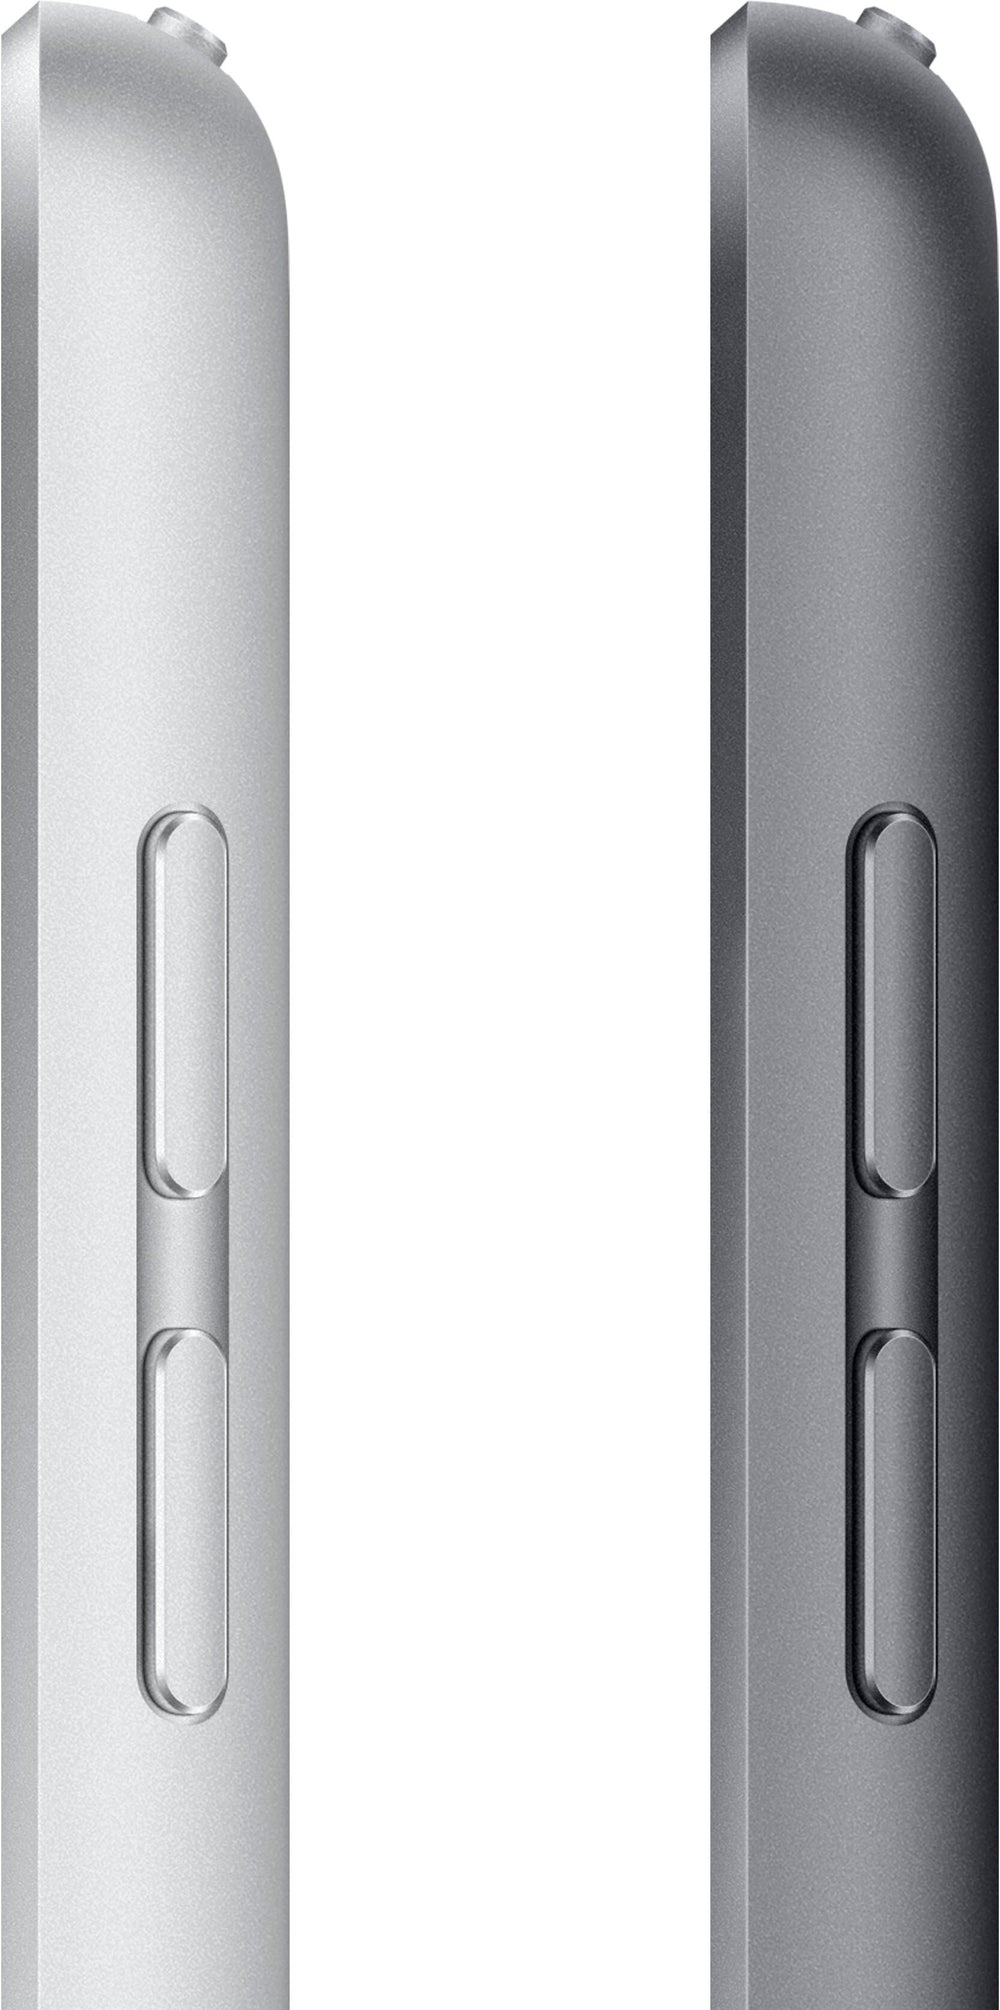 Apple - 10.2-Inch iPad (Latest Model) with Wi-Fi + Cellular - 64GB - Space Gray (Verizon)_1